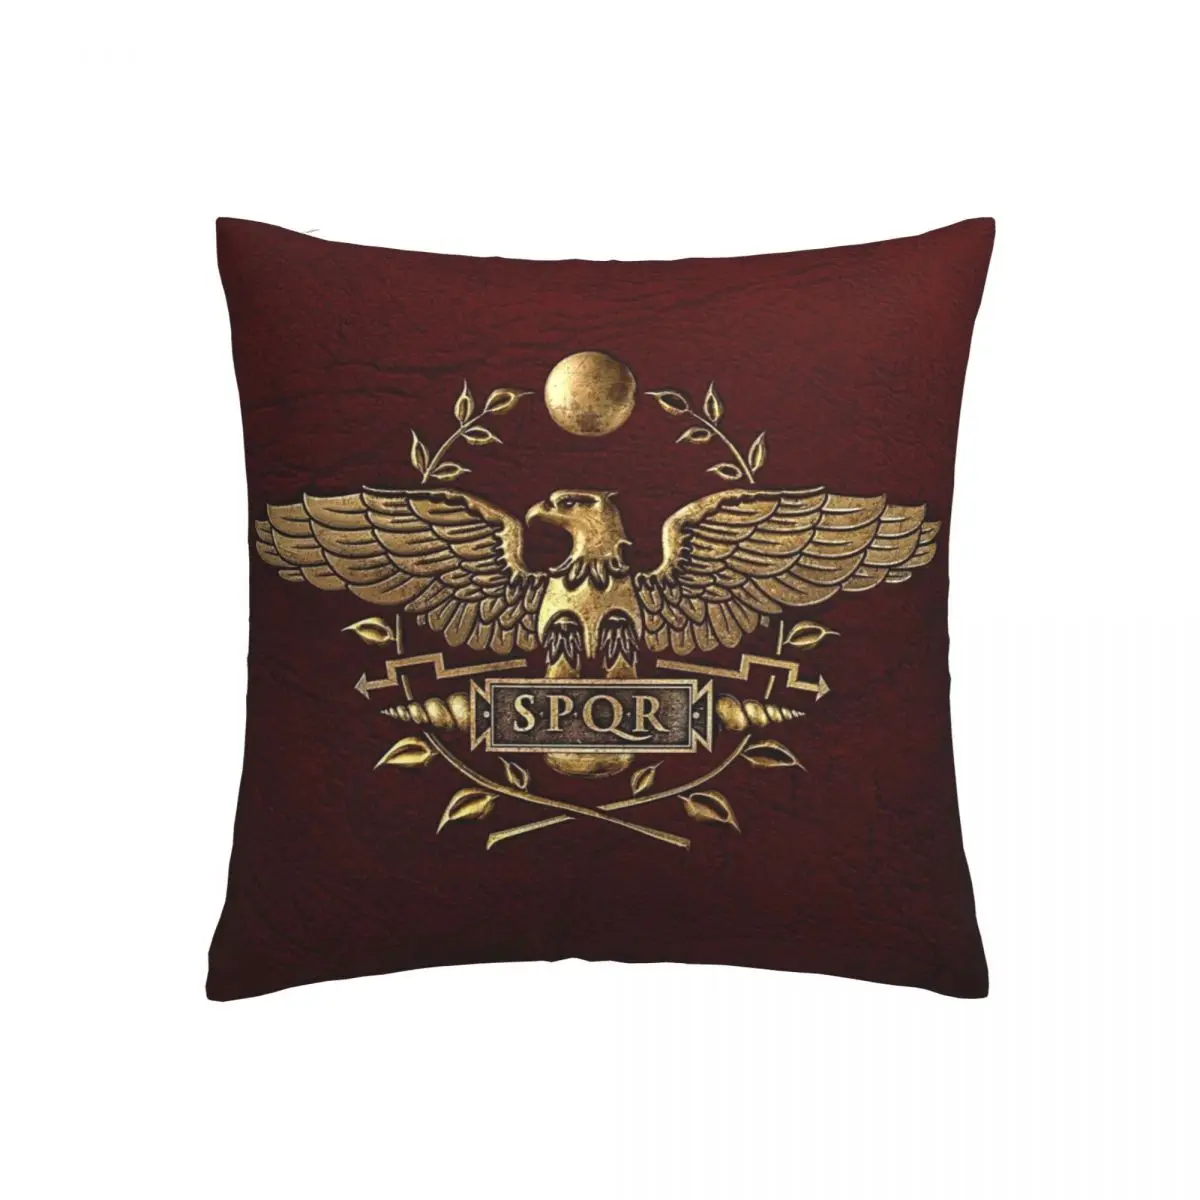 45cmX45cm SPQR Roman Empire Senate And The People Of The Roman Flag Sofa cushions and pillowcases home decoration